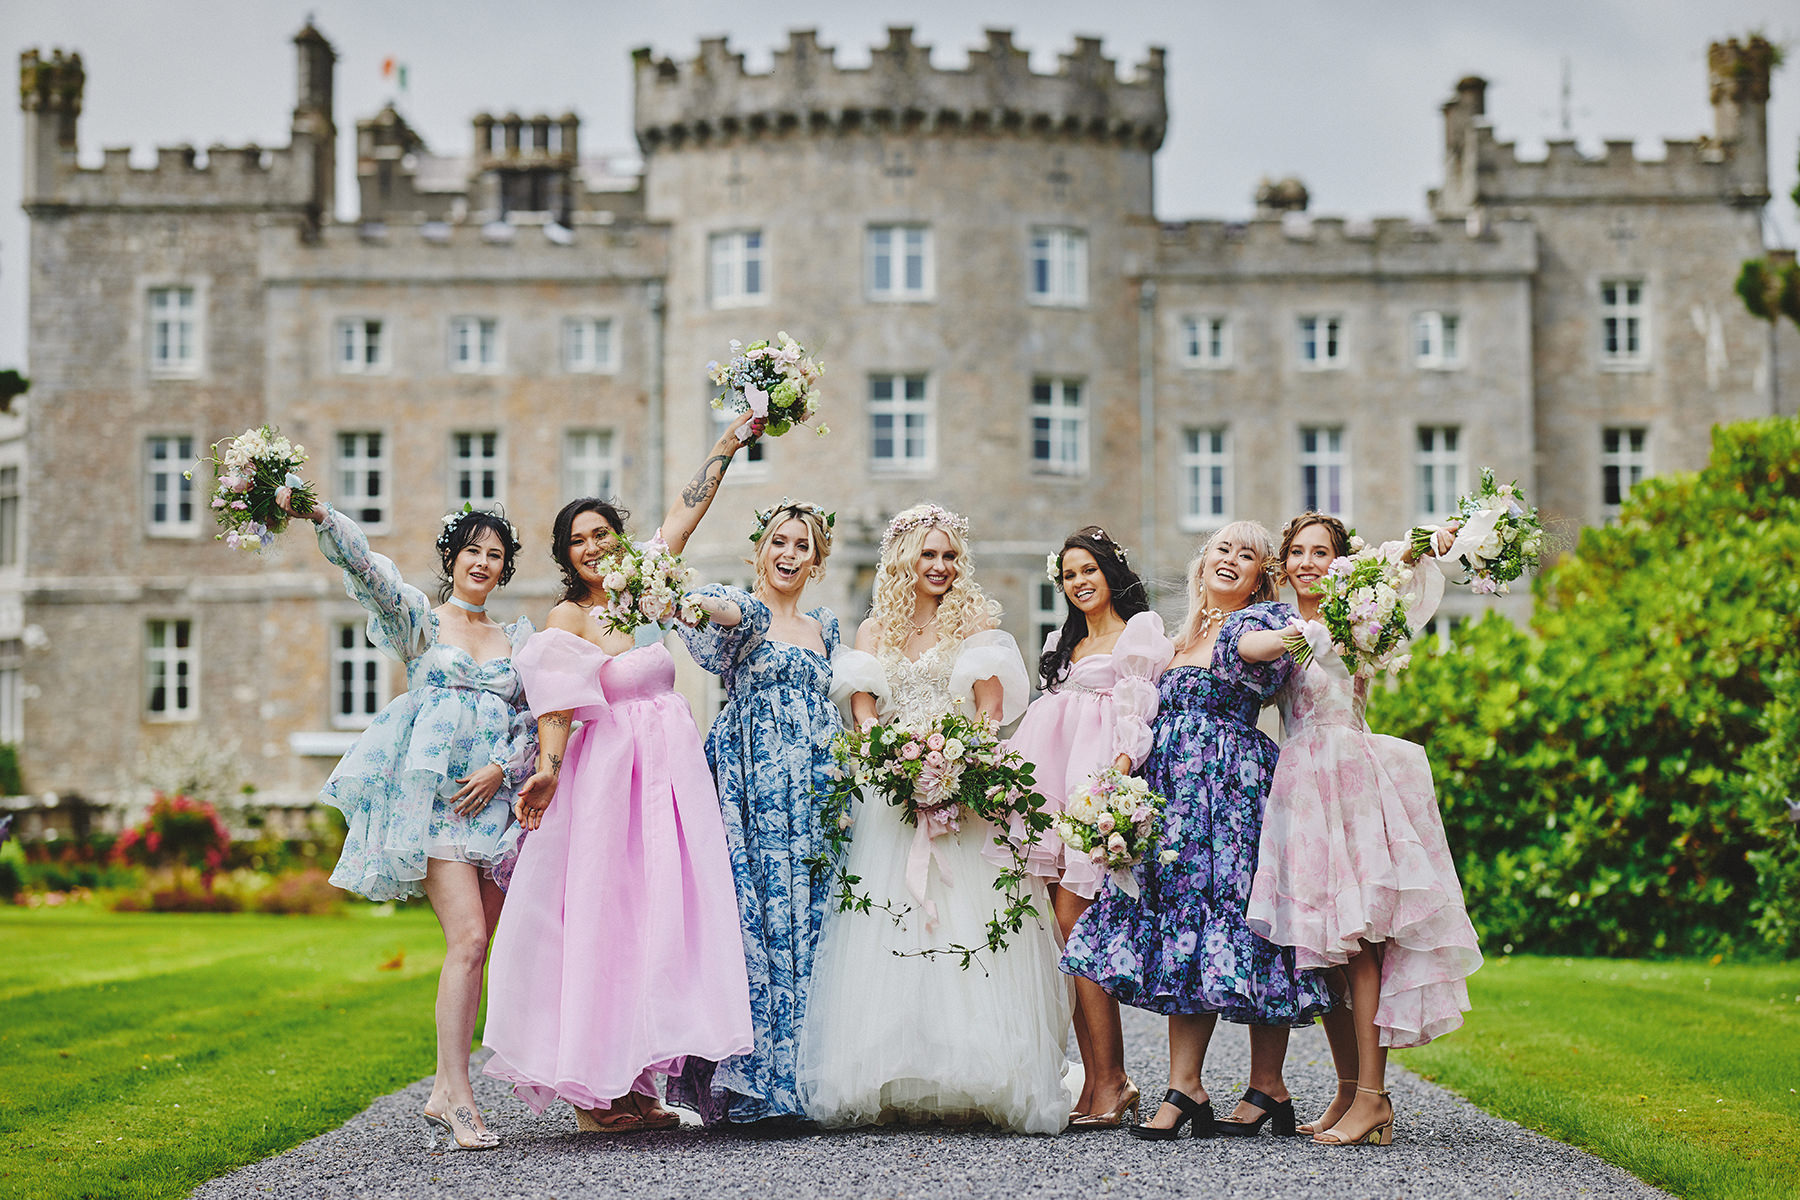 Top 8 Blush Plus Size Bridesmaid Dresses To Please You - ColorsBridesmaid